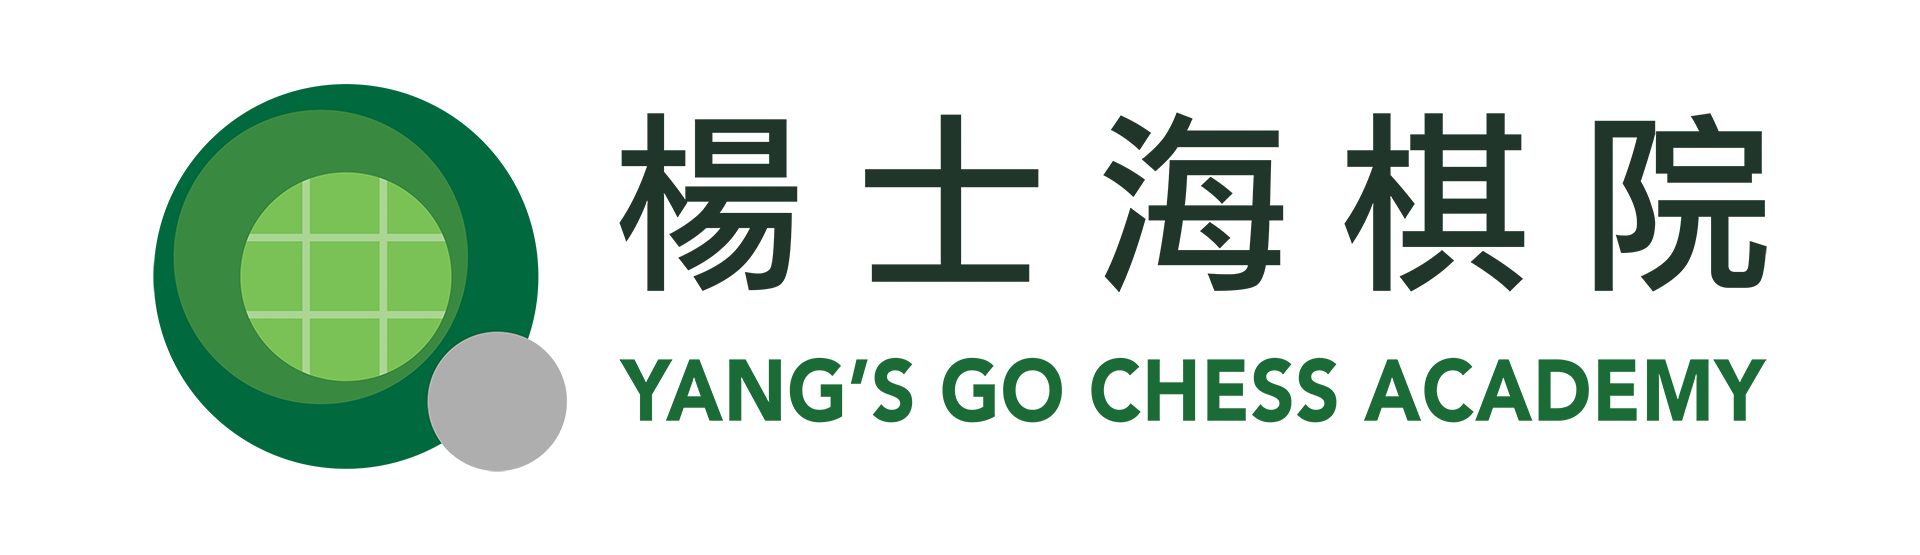 楊士海棋院 Yang's Go Chess Academy